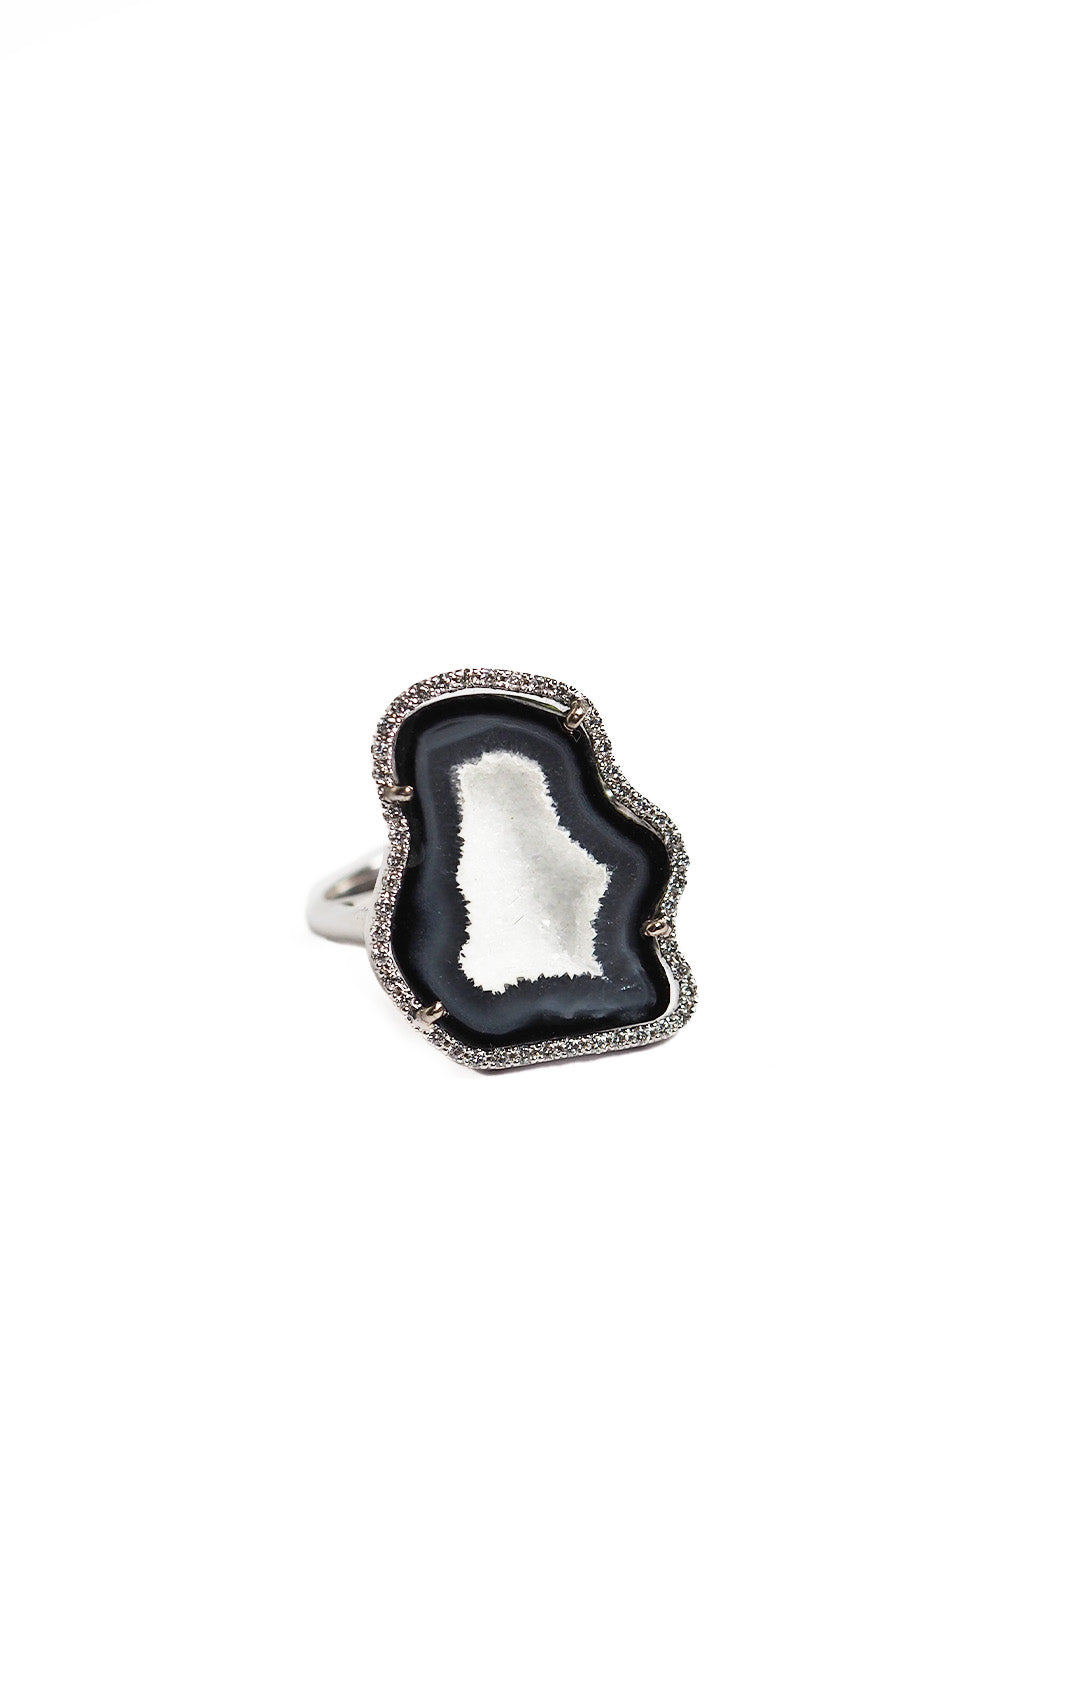 ROCKY ring, black/grey (white gold)